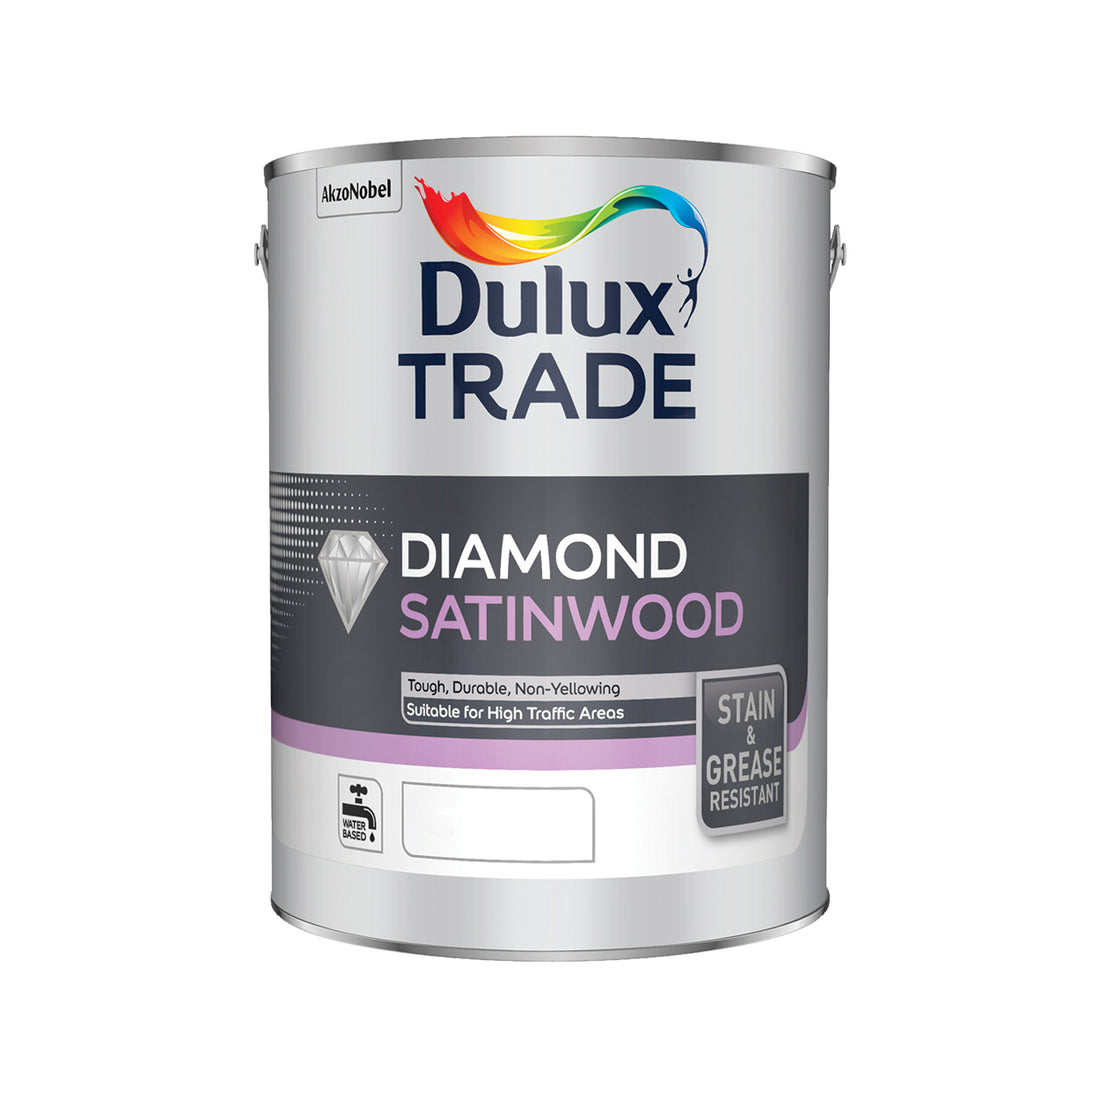 Dulux Trade Diamond Satinwood Pure Brilliant White 5L